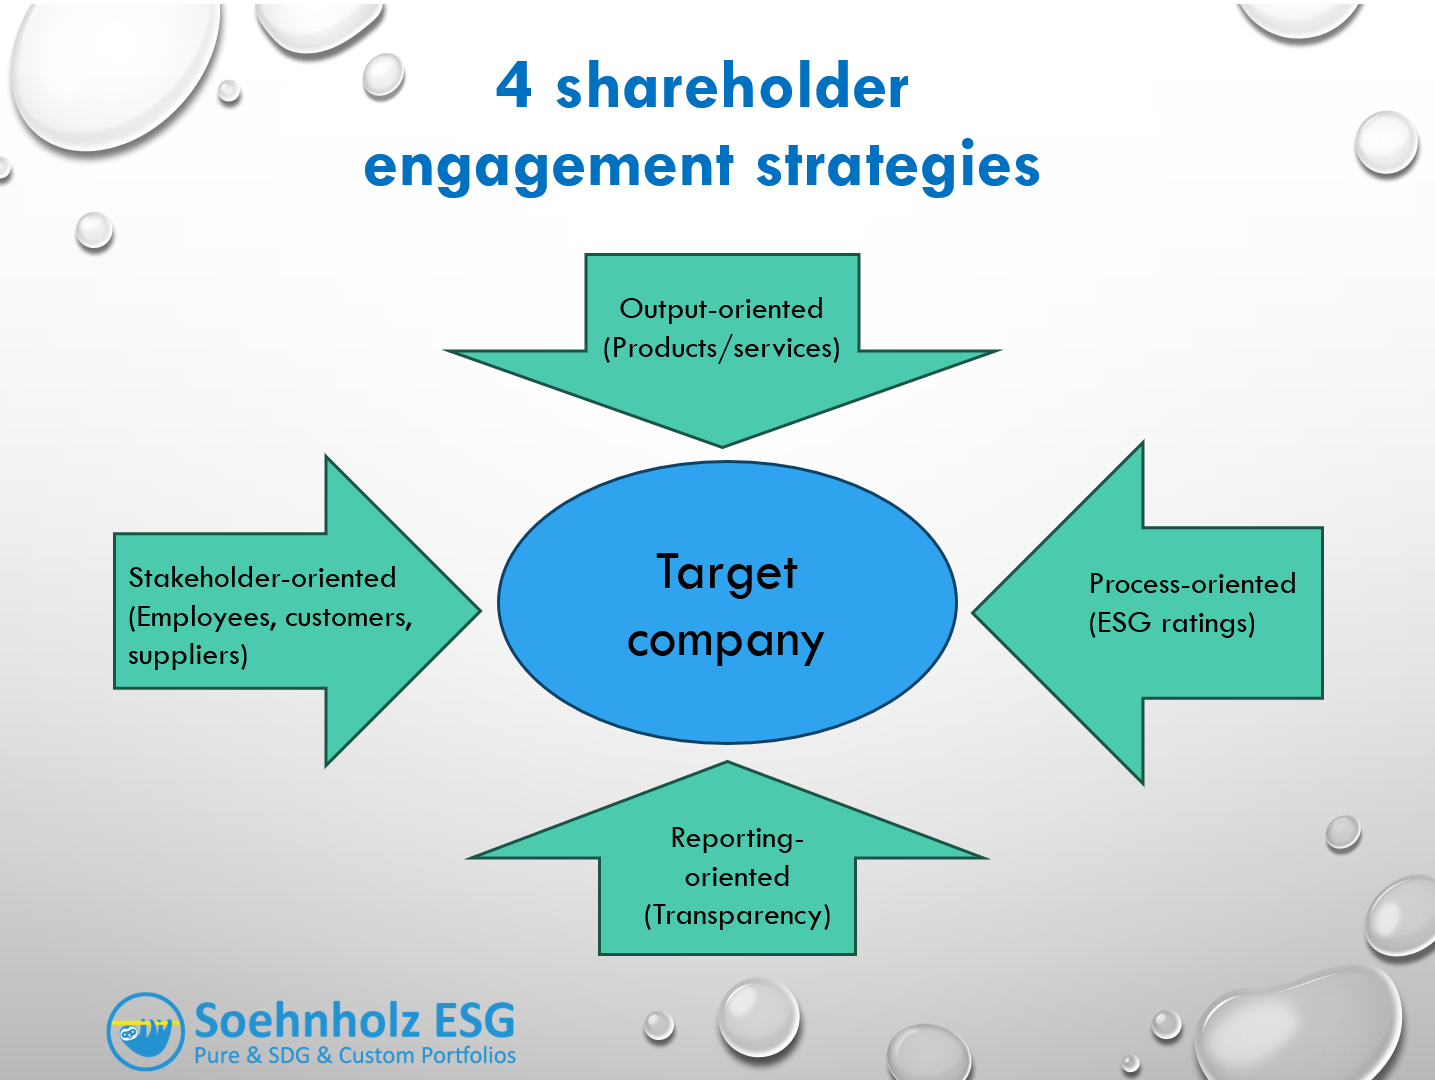 Shareholder engagement strategies illustration shows 4 such strategies